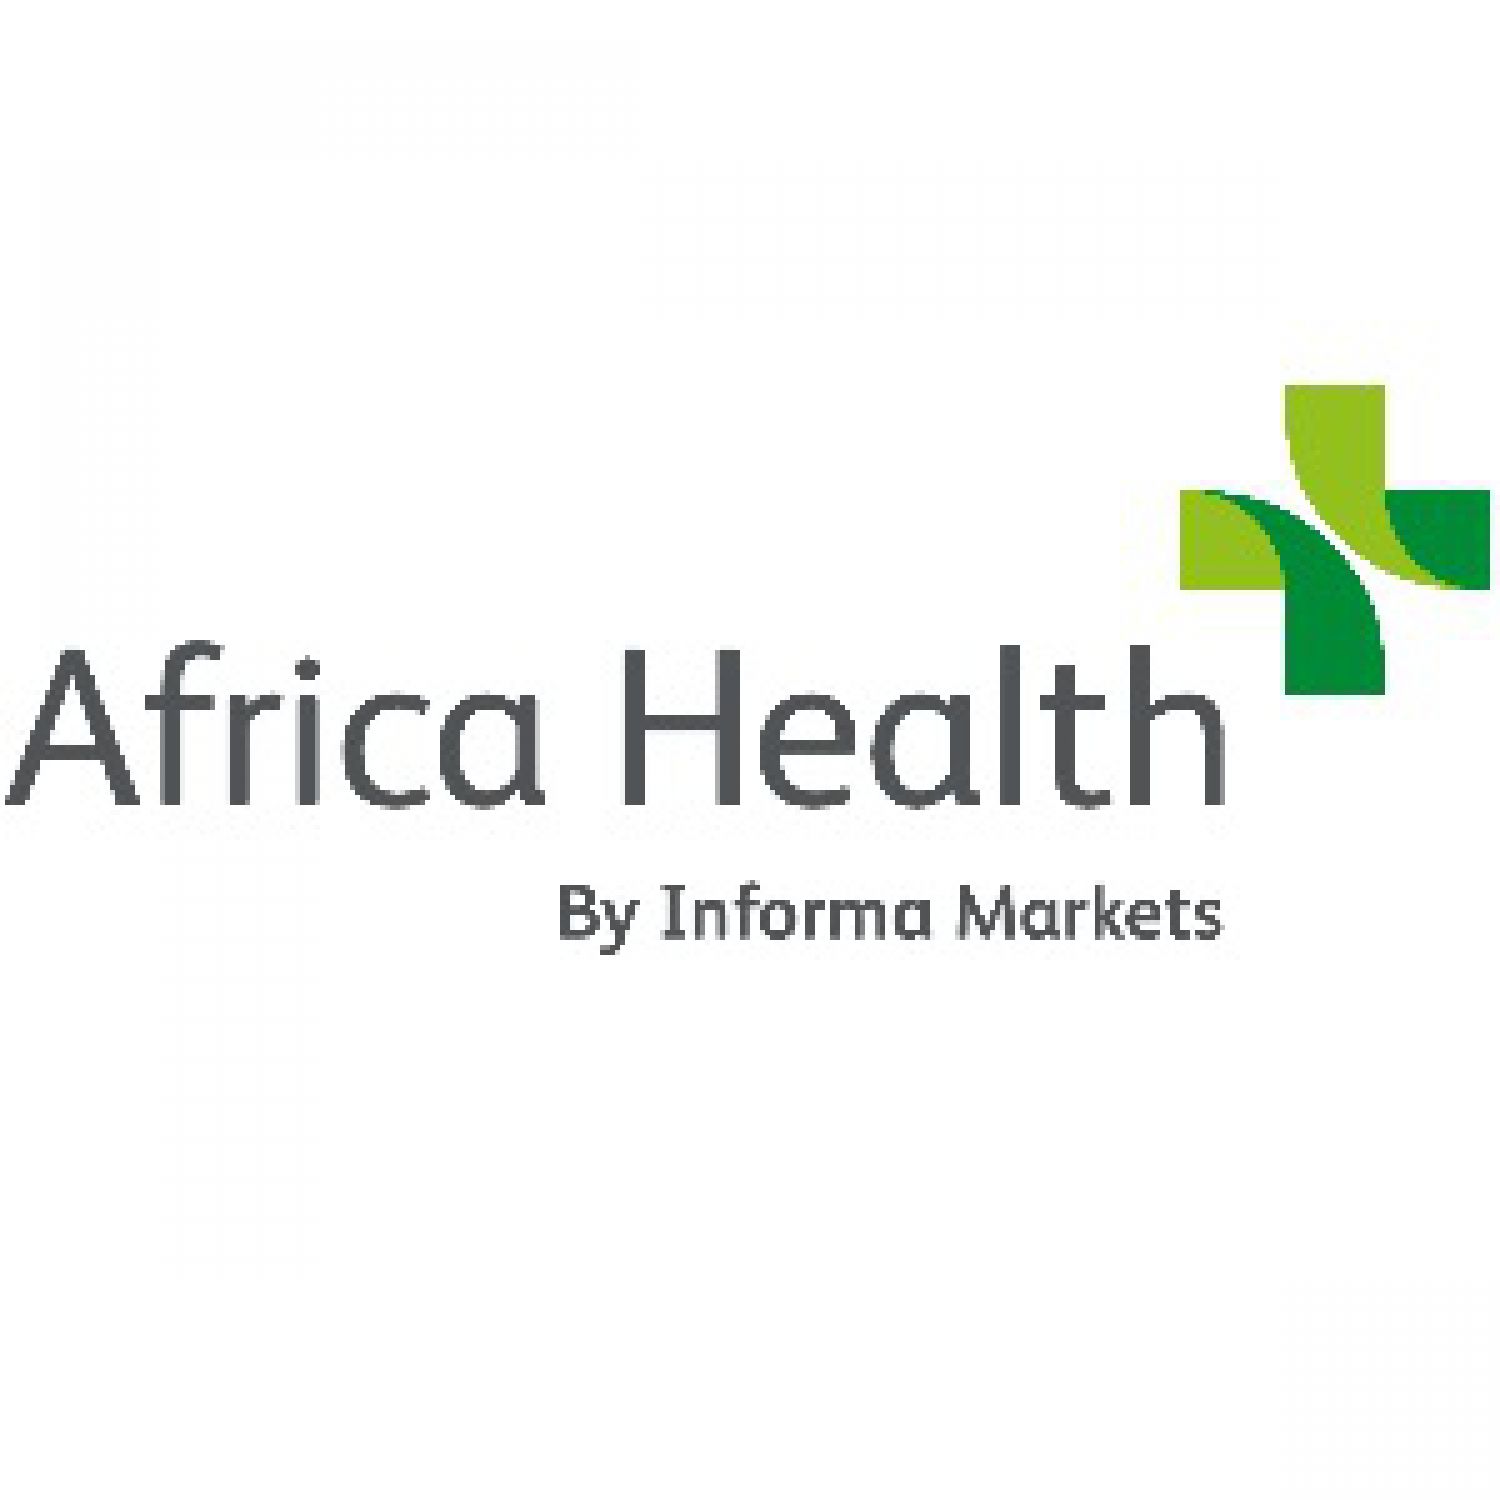 Africa Health 2019